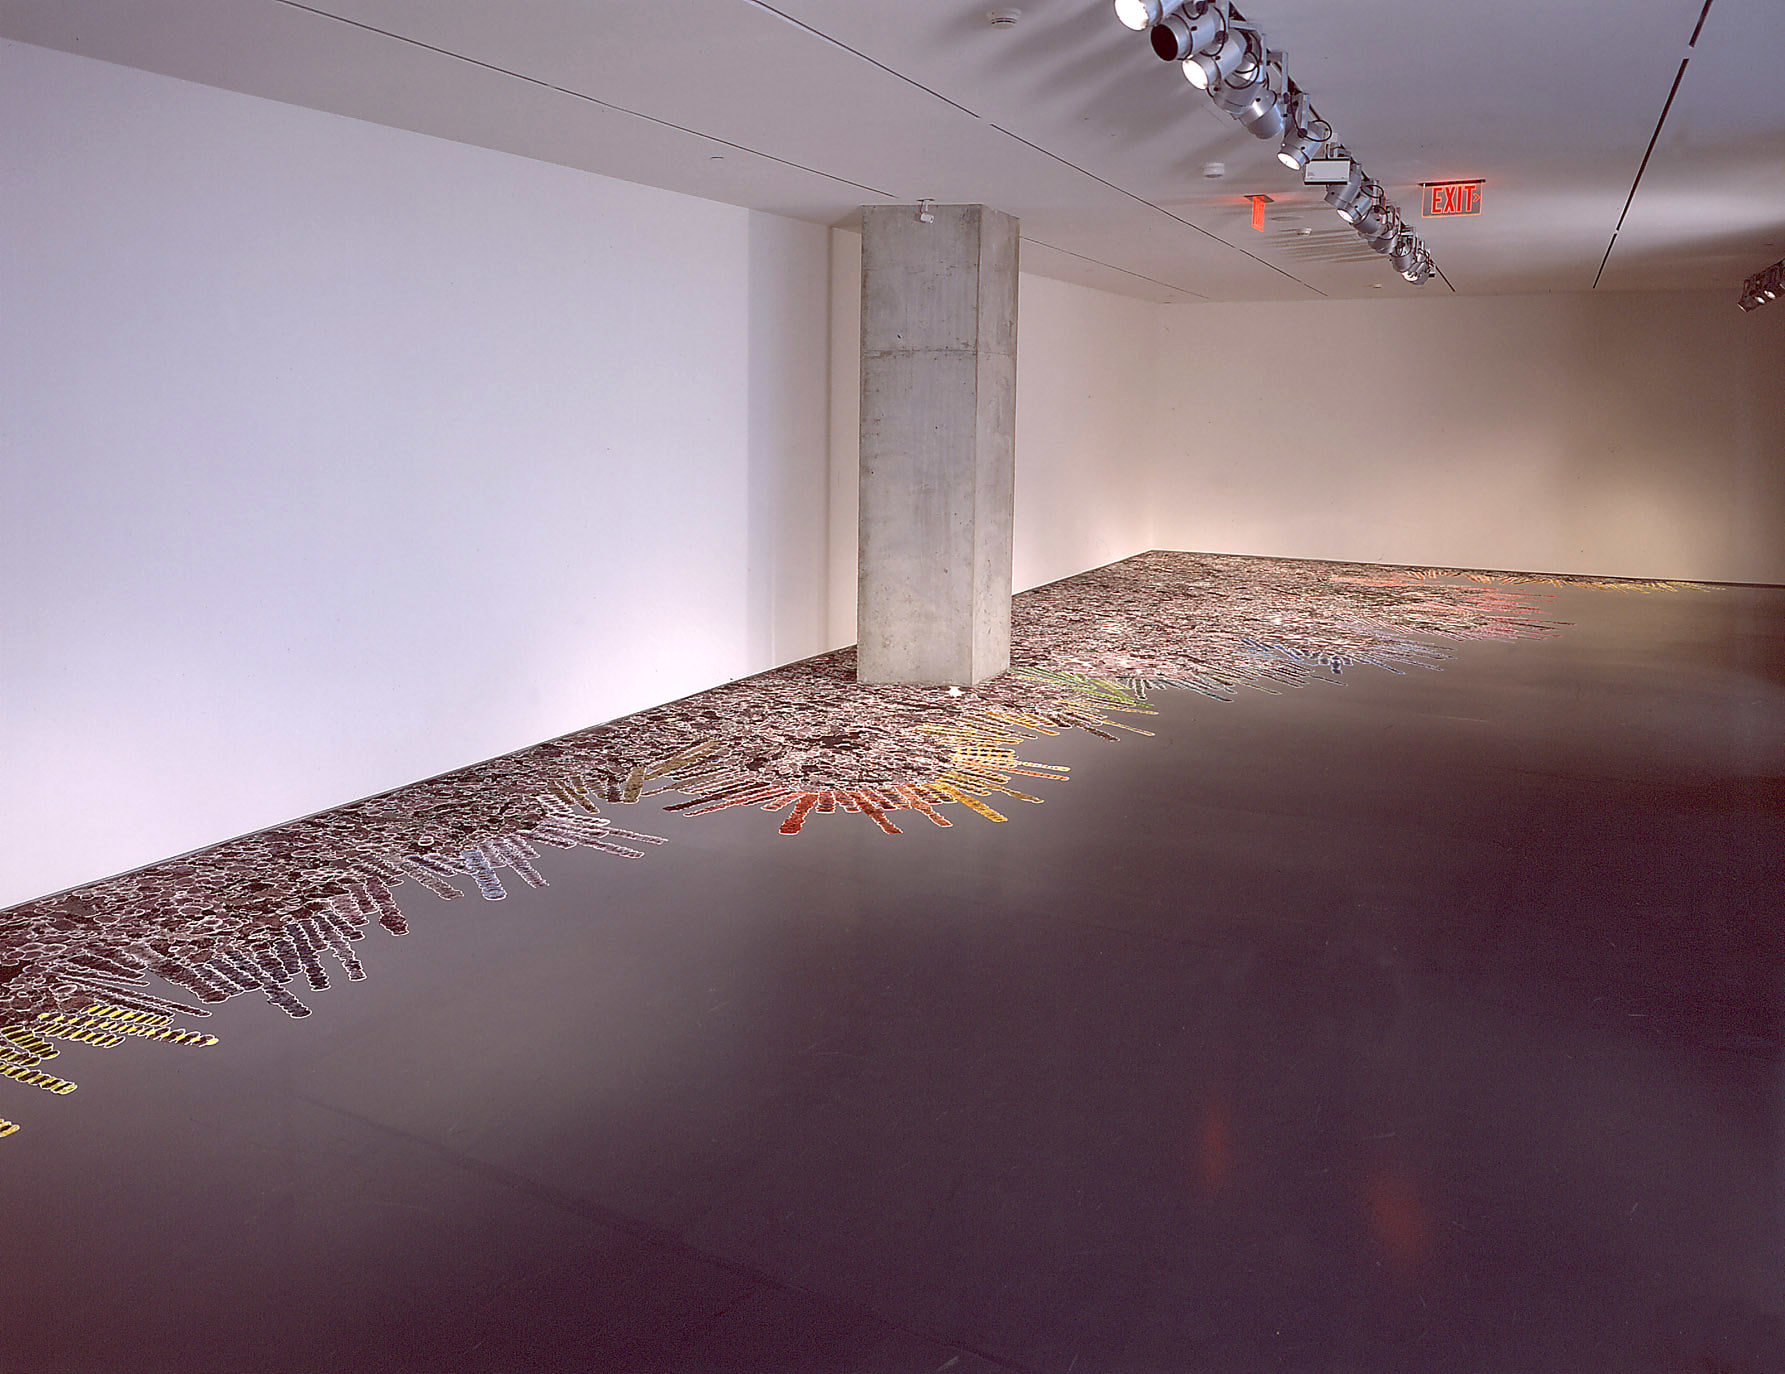 Polly Apfelbaum, installation view, Contemporary Arts Center (2004)